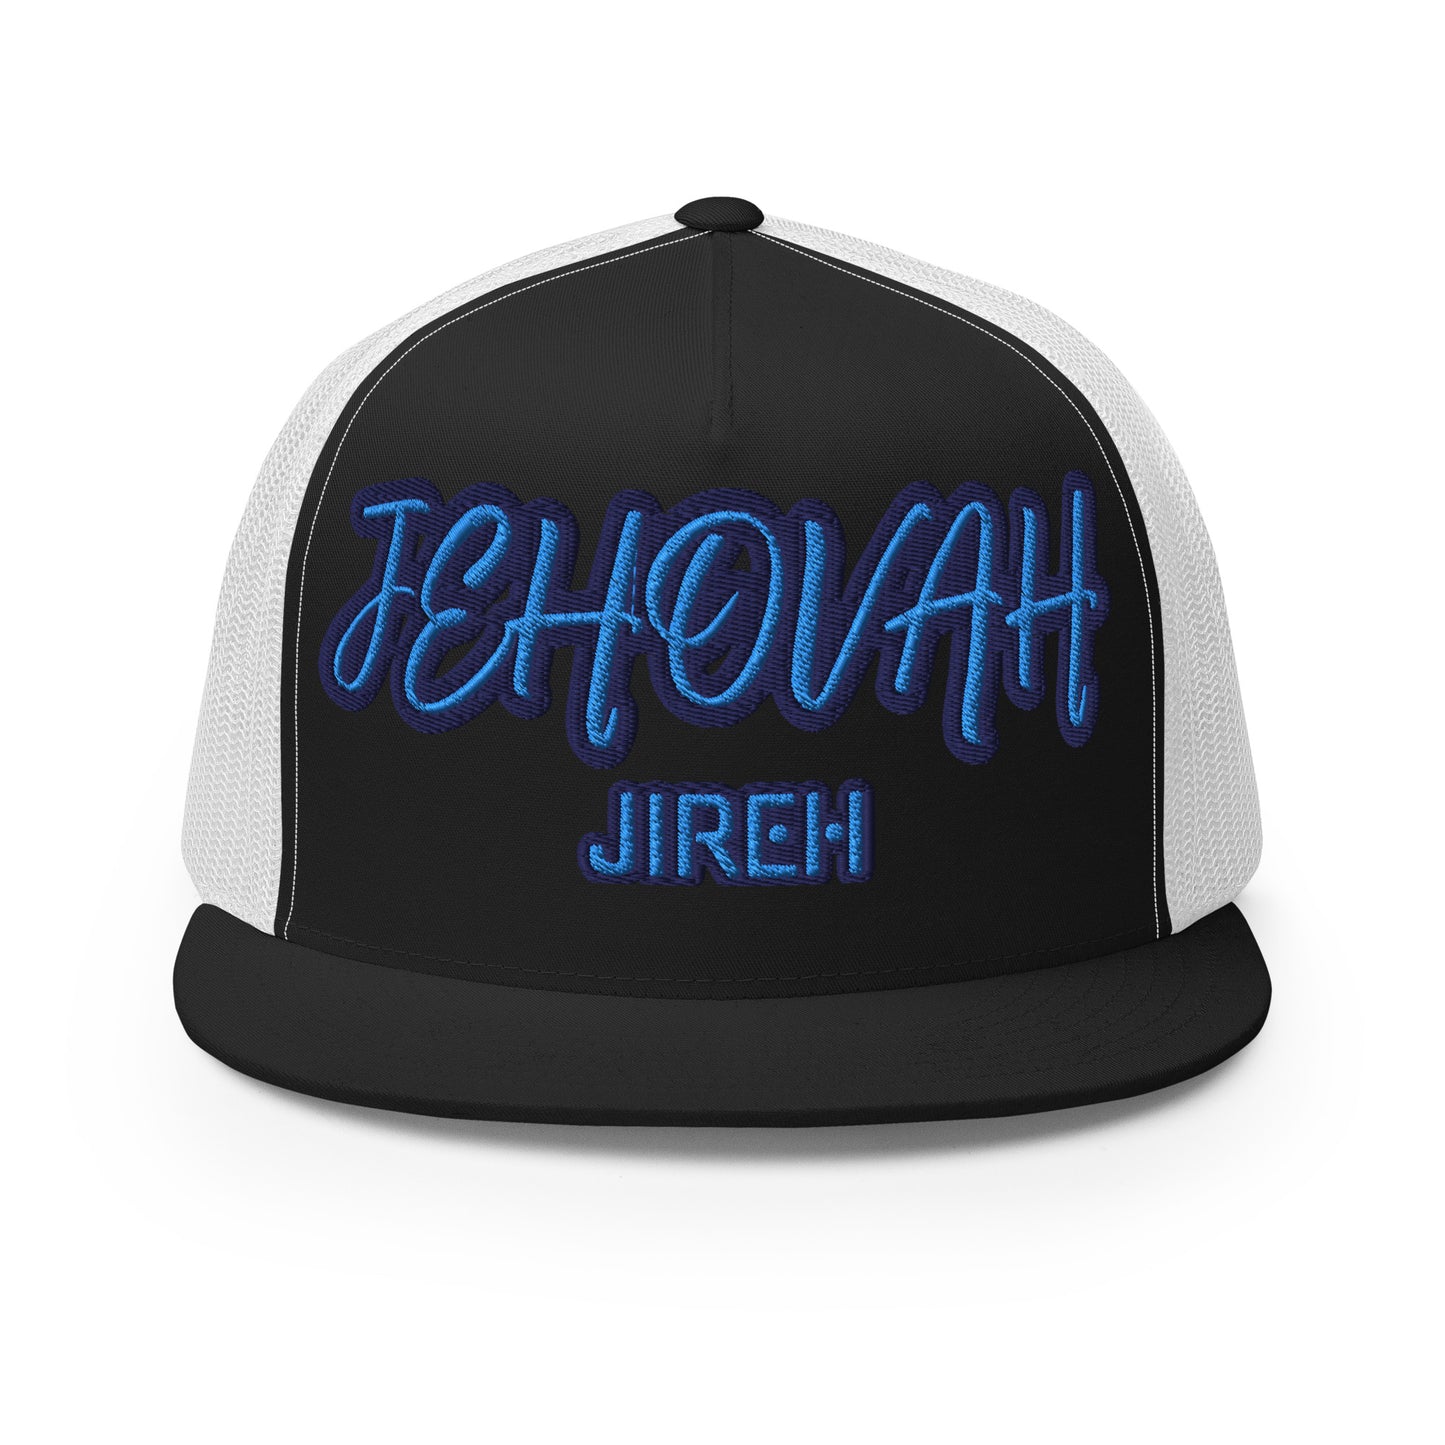 JEHOVAH JIREH- Trucker Cap